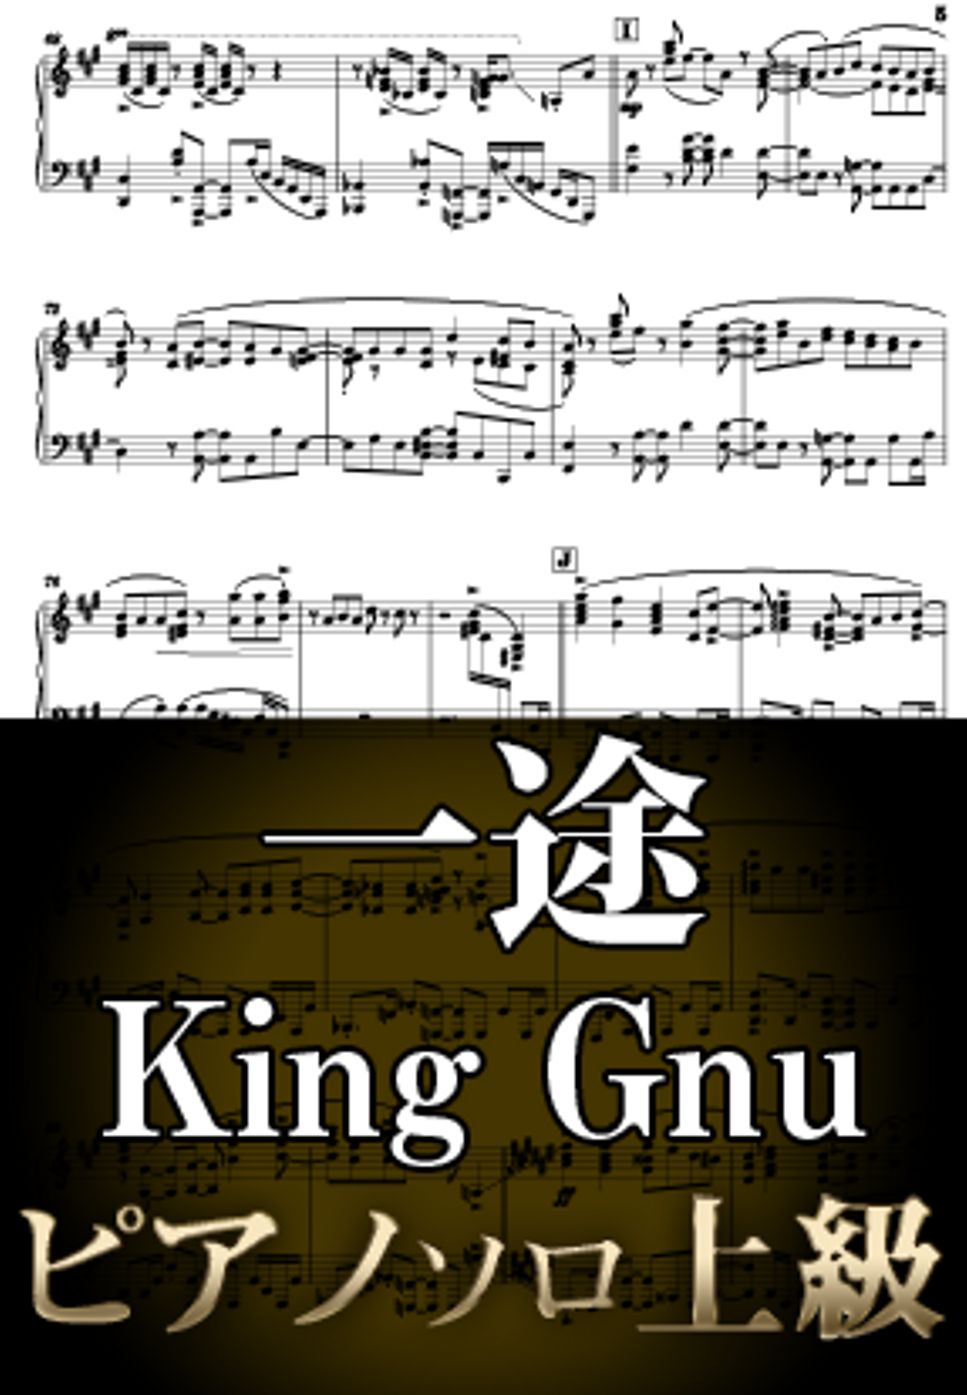 King Gnu - 一途 (ピアノソロ上級  / 劇場版アニメ『呪術廻戦 0』主題歌) by Suu